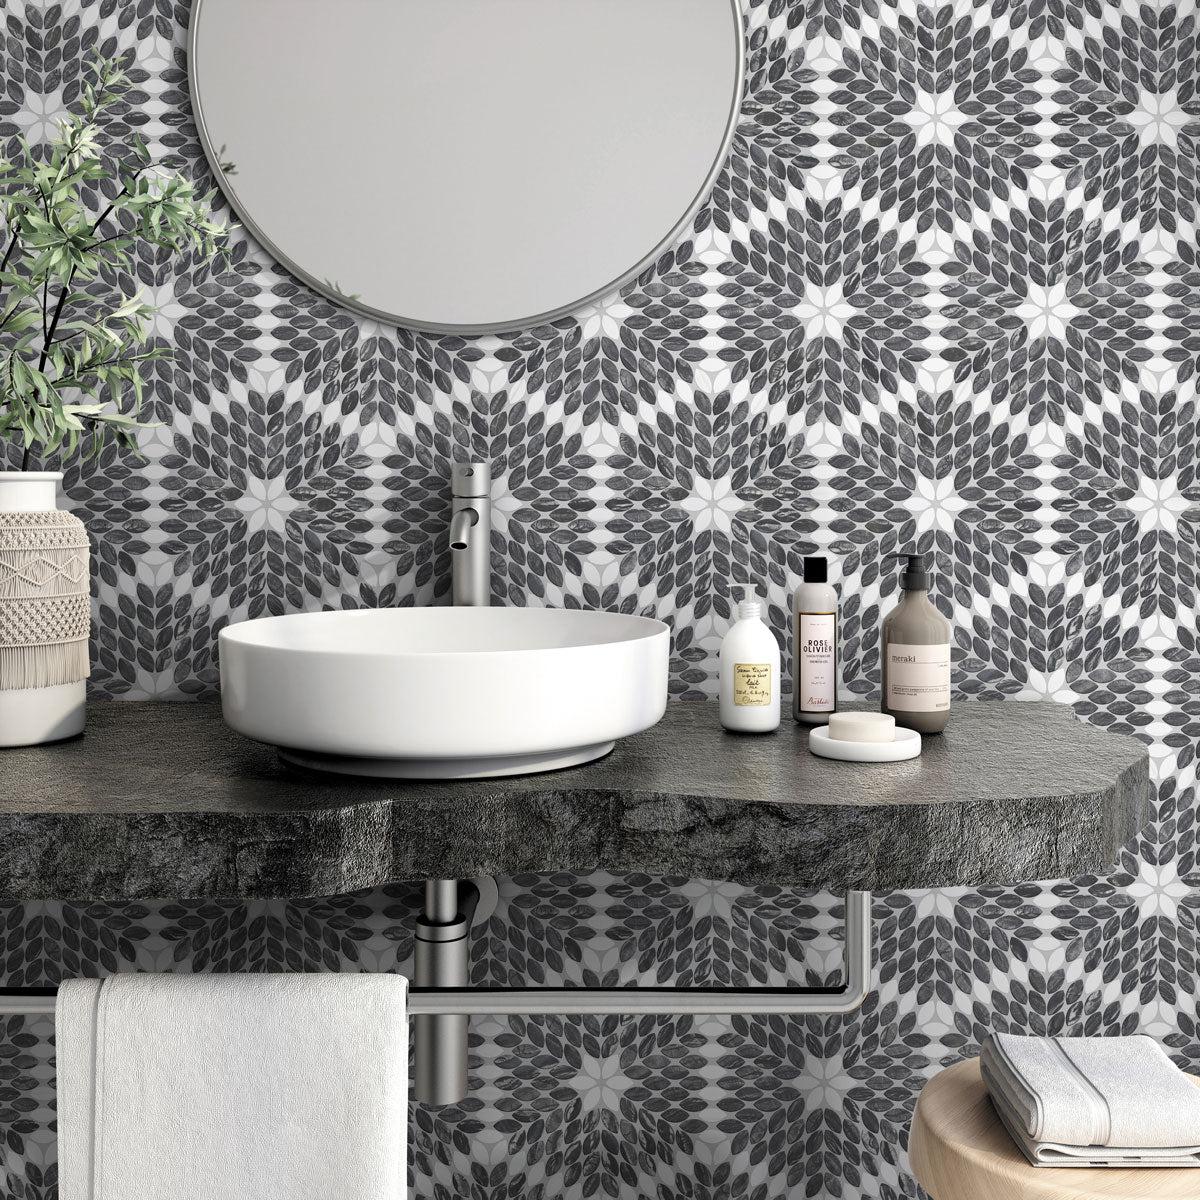 Santorini Black & White Petals Marble Mosaic Bathroom Wall